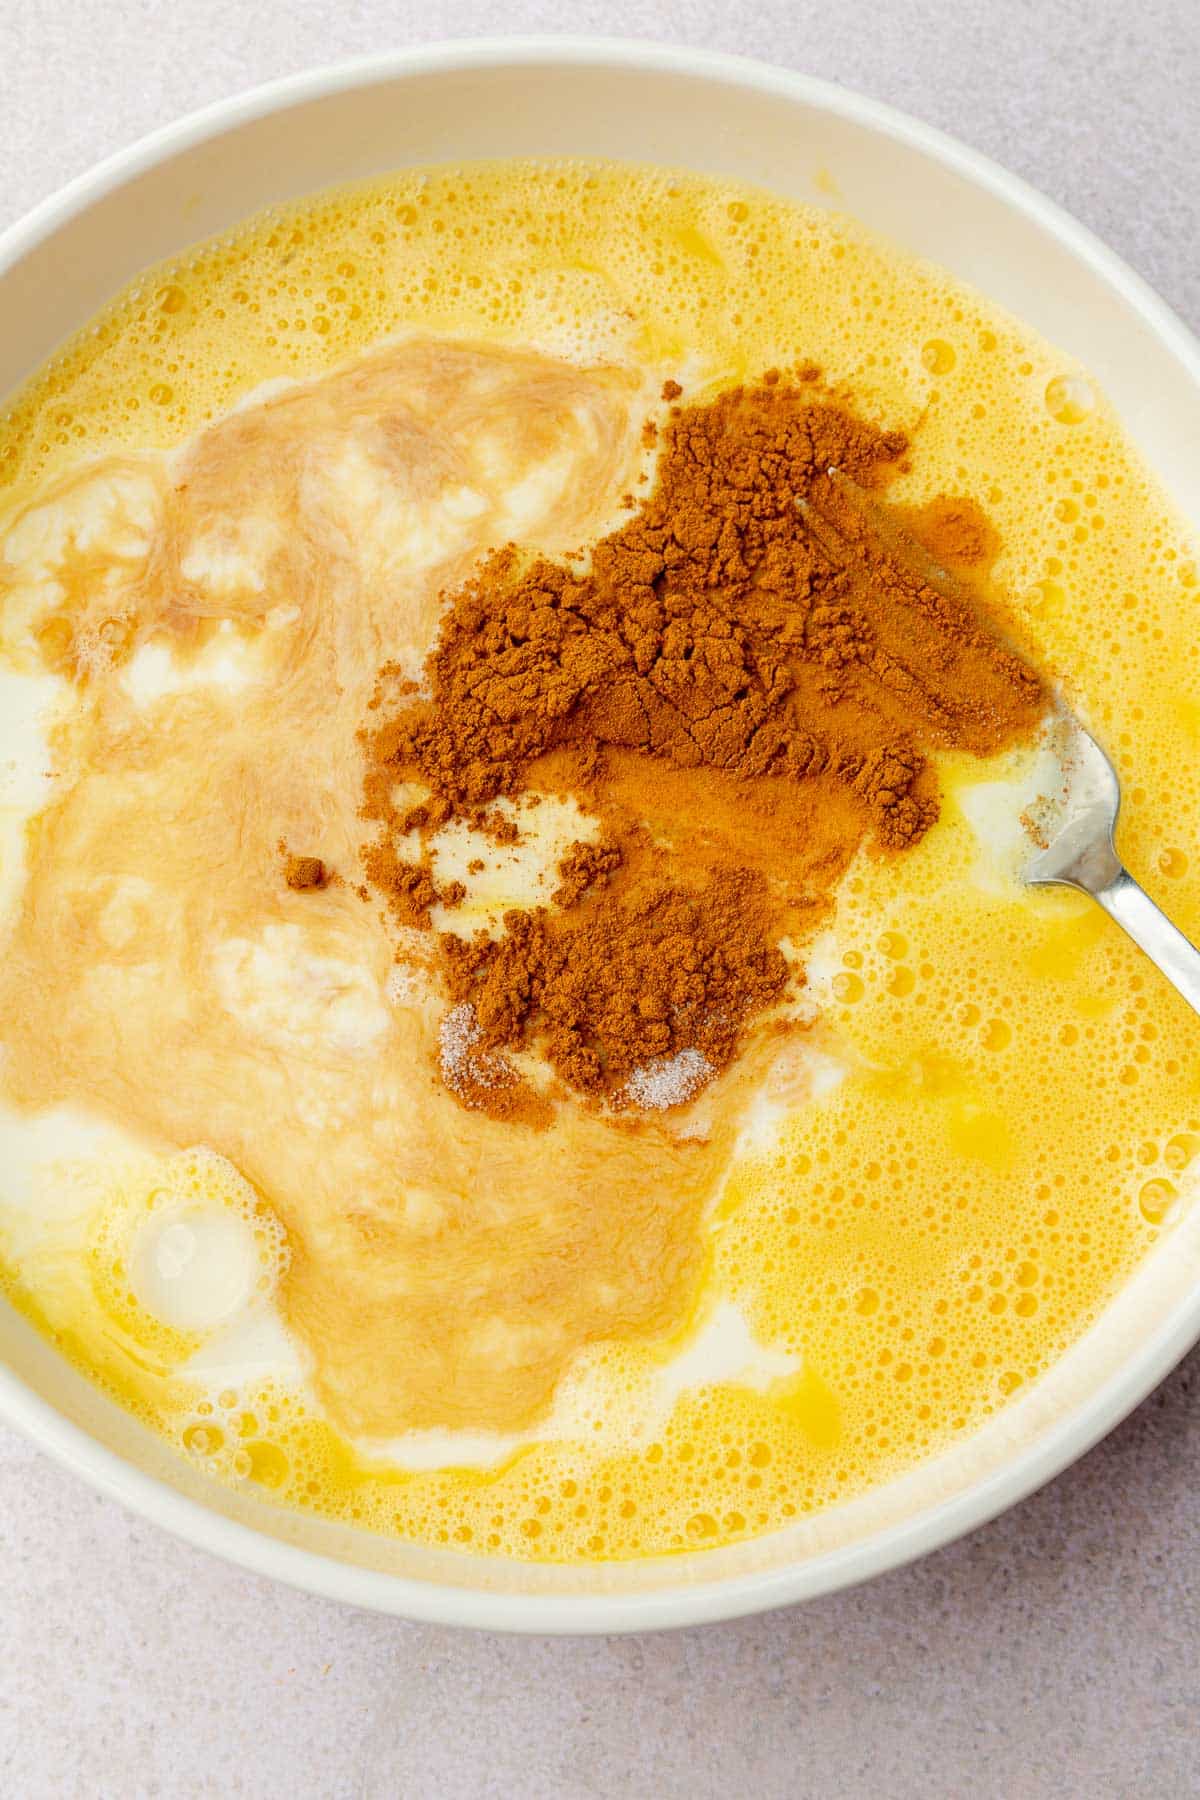 A shallow bowl of beaten eggs, milk, vanilla extract, and ground cinnamon.